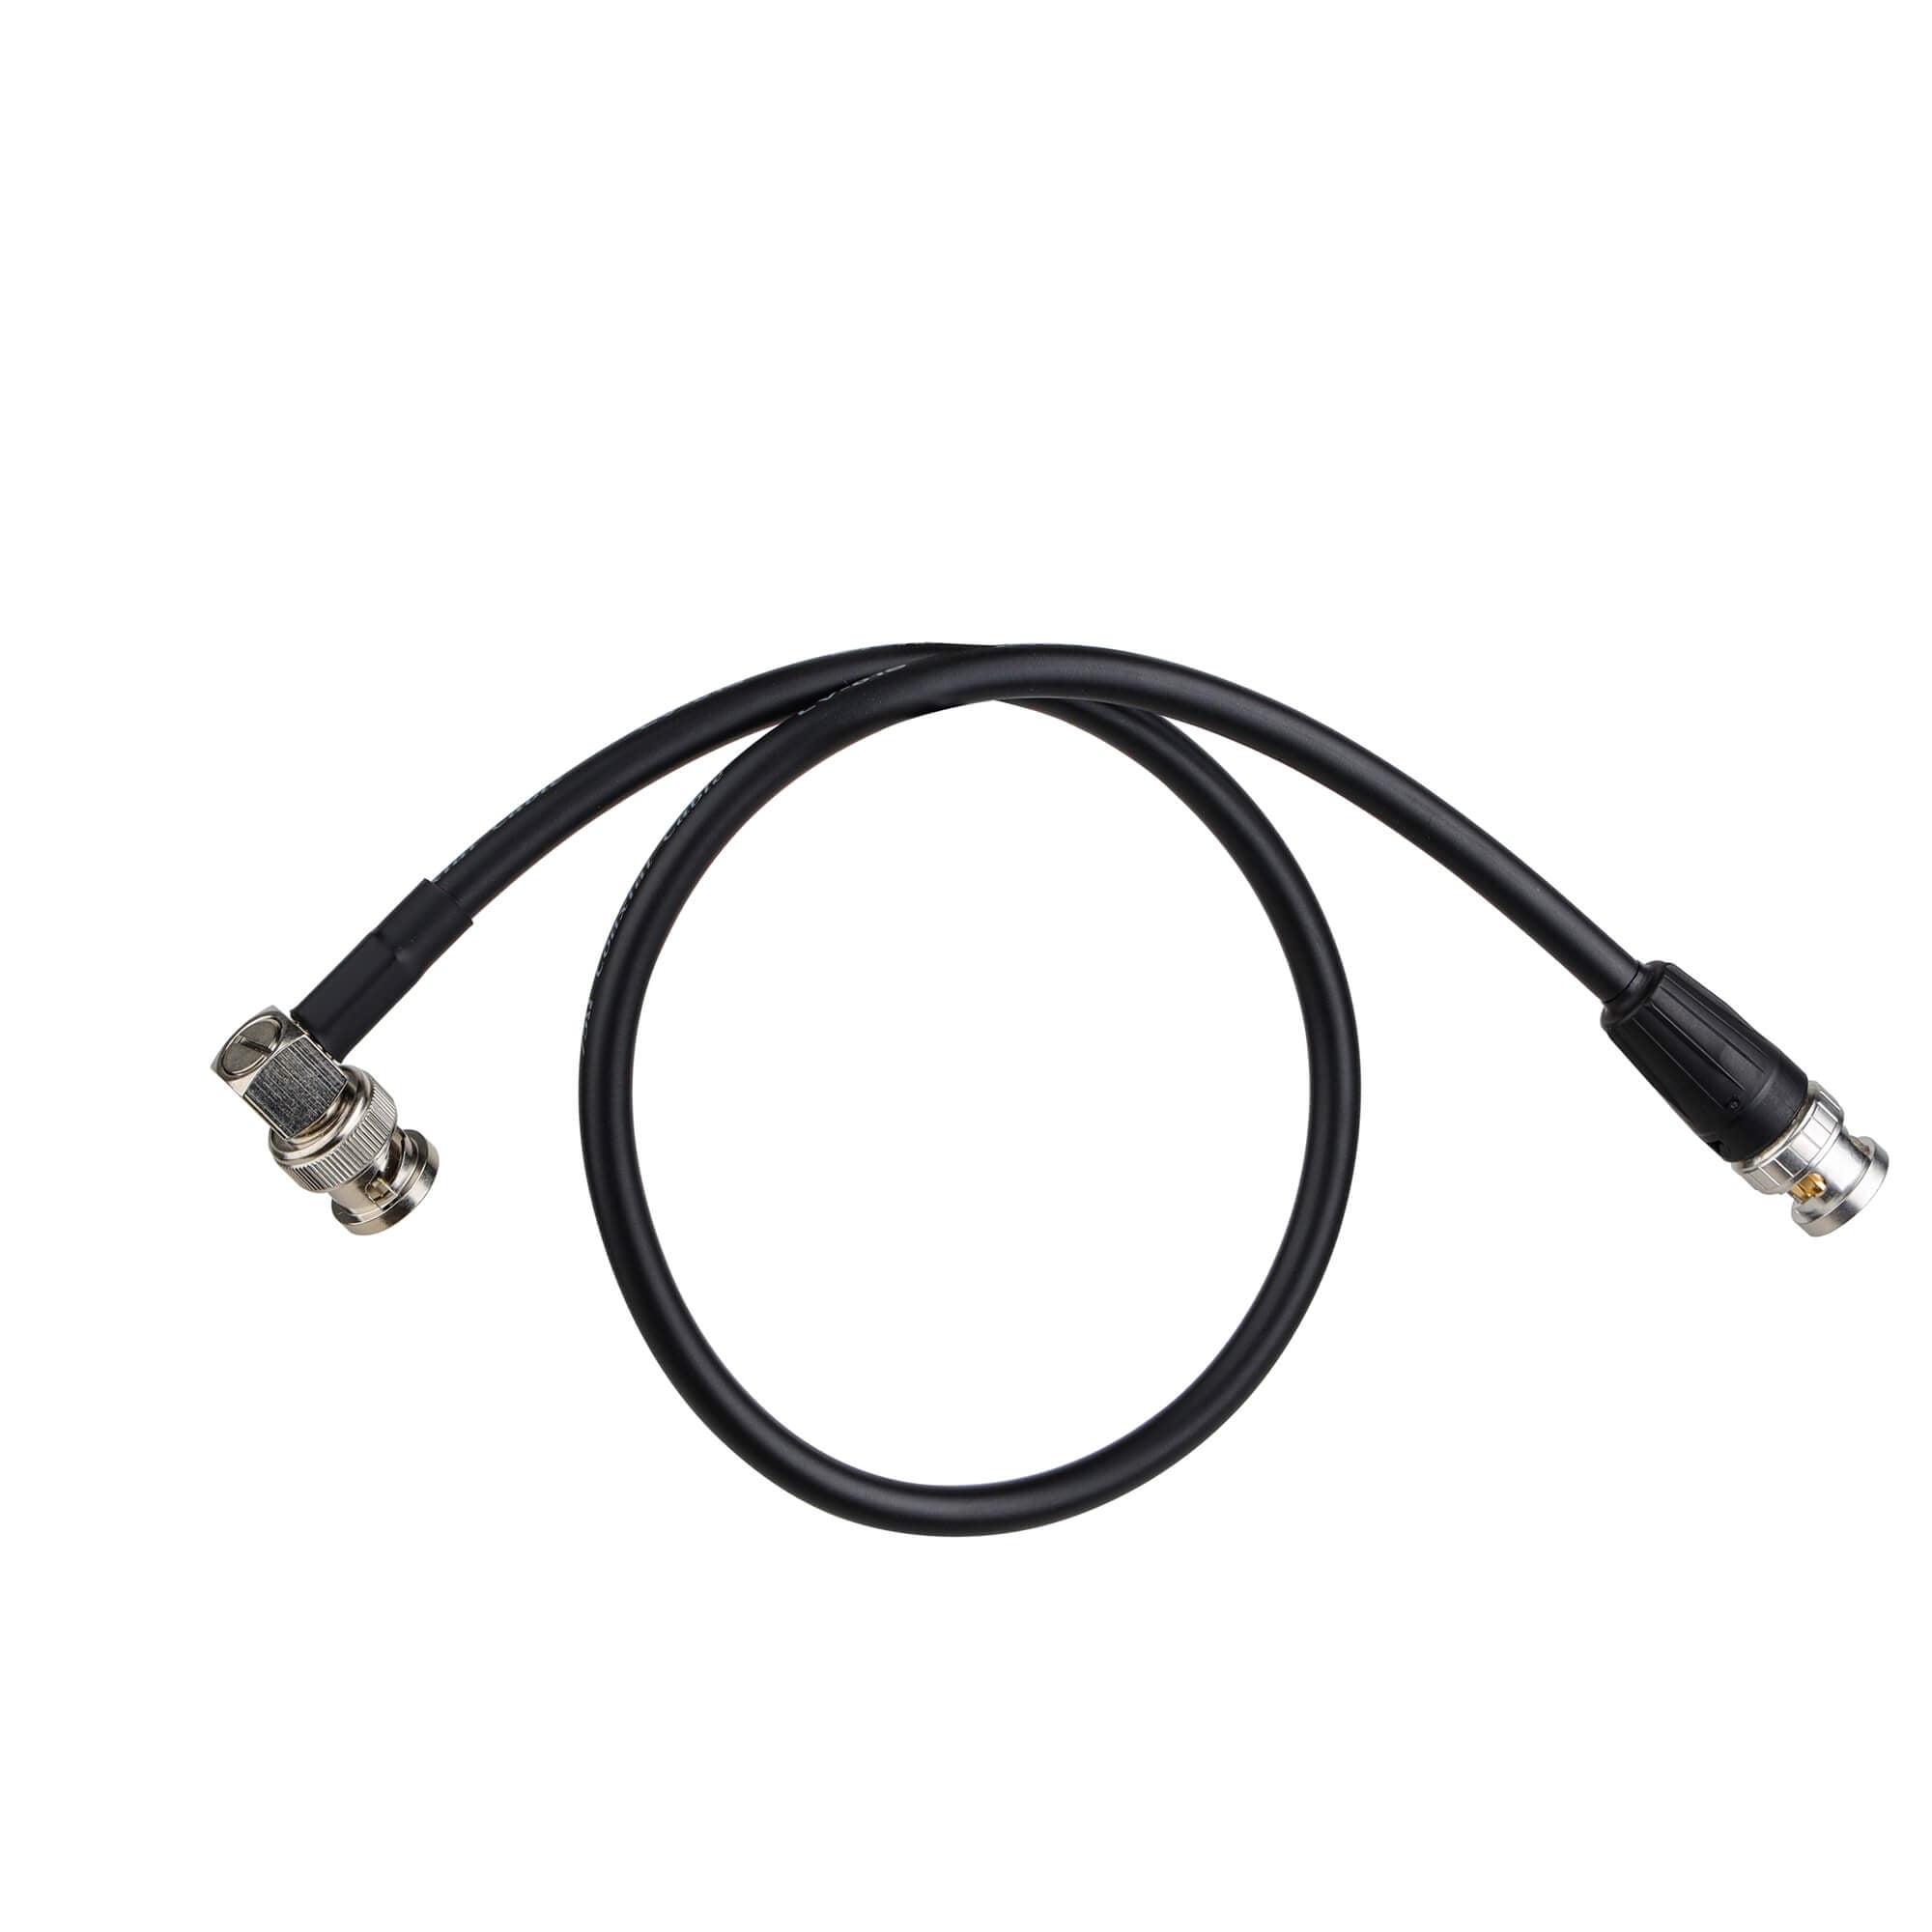 12G SDI cable